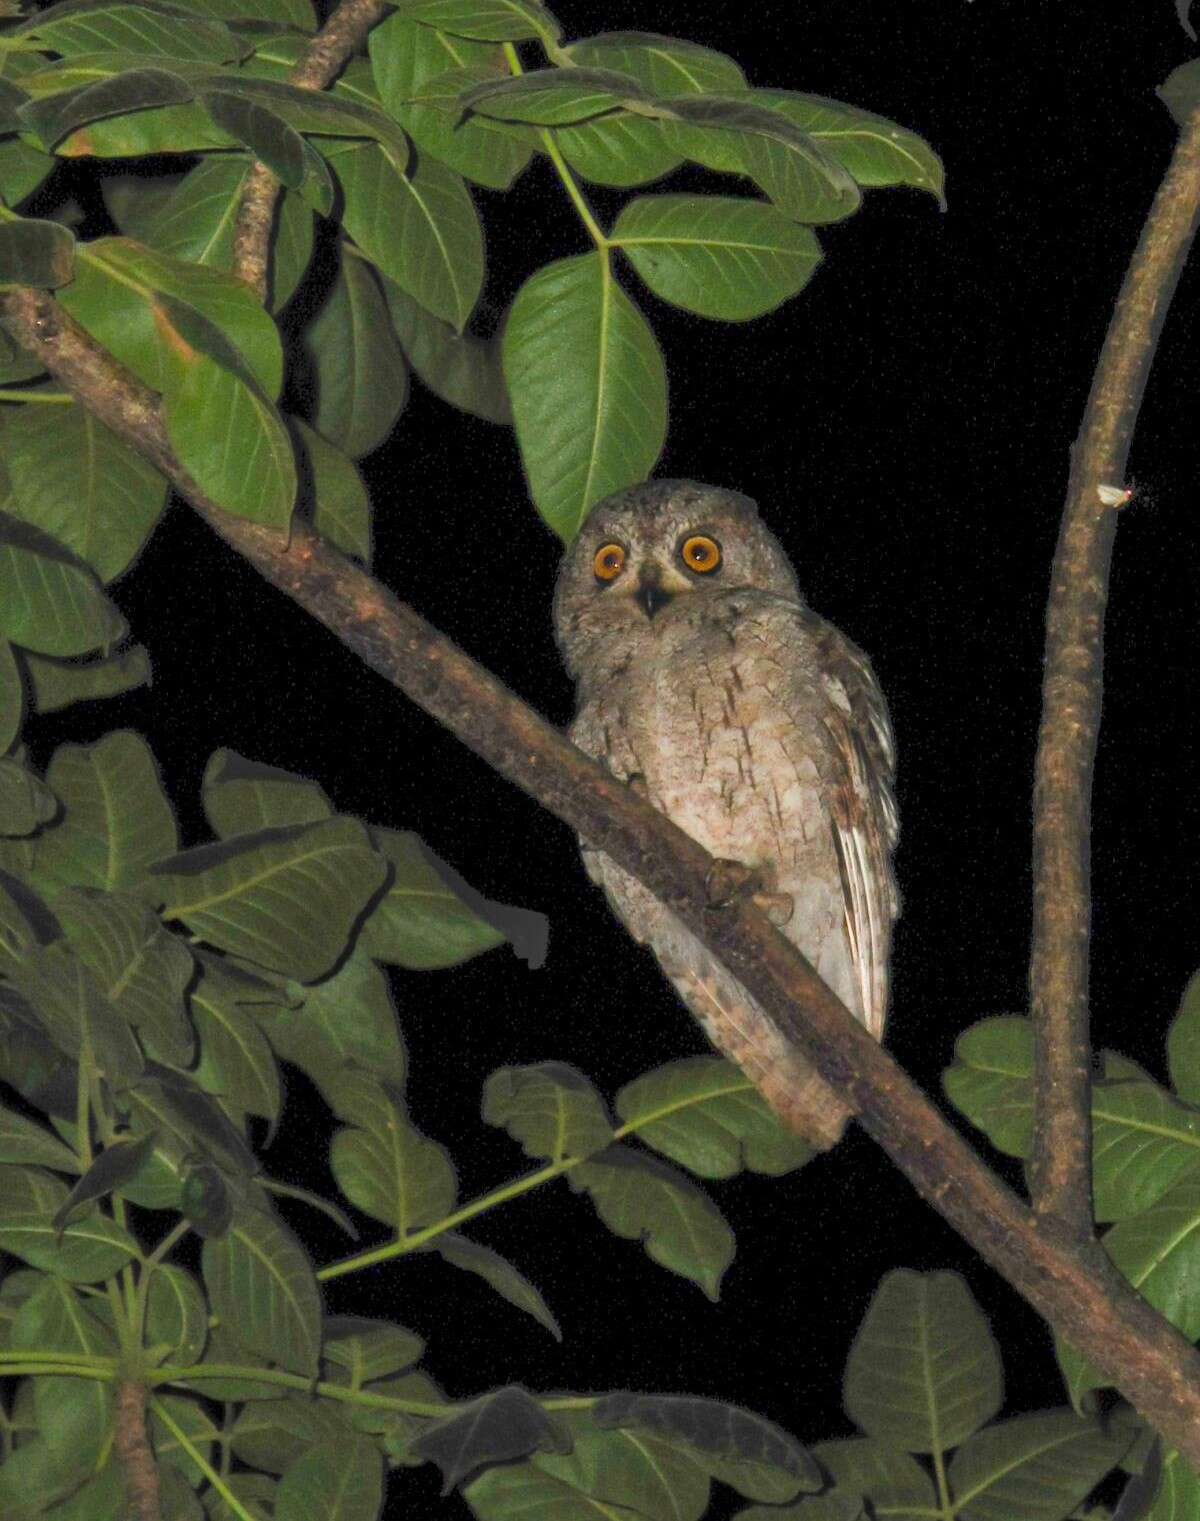 Image of Socotra Scops Owl